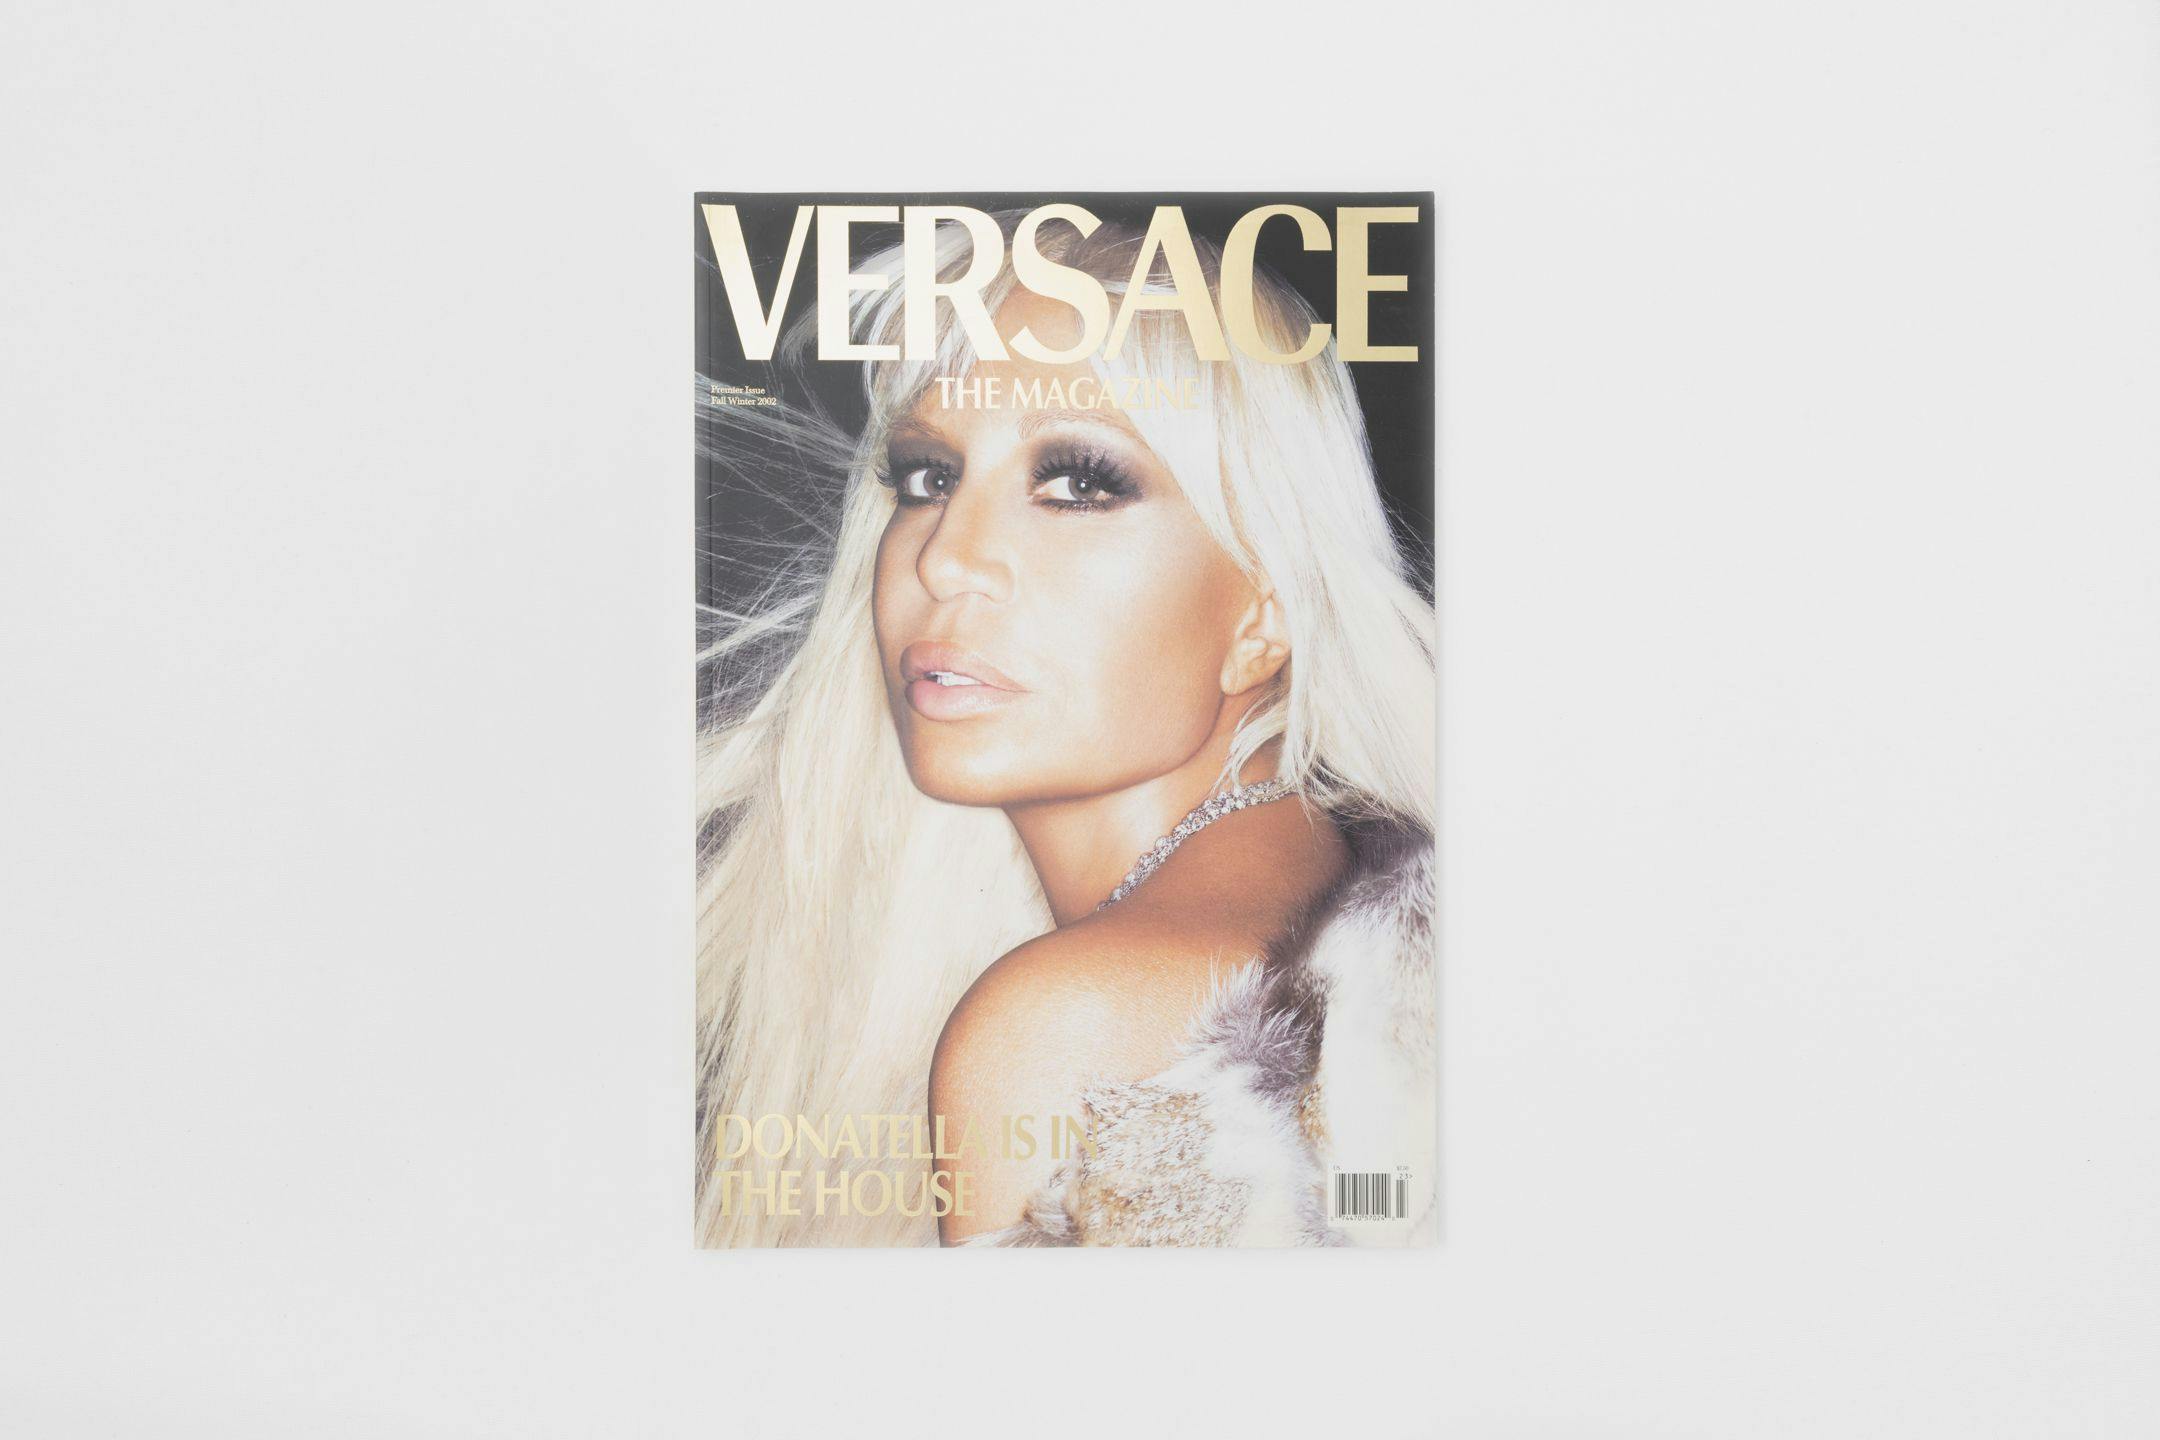 Versace The Magazine Issue 1 